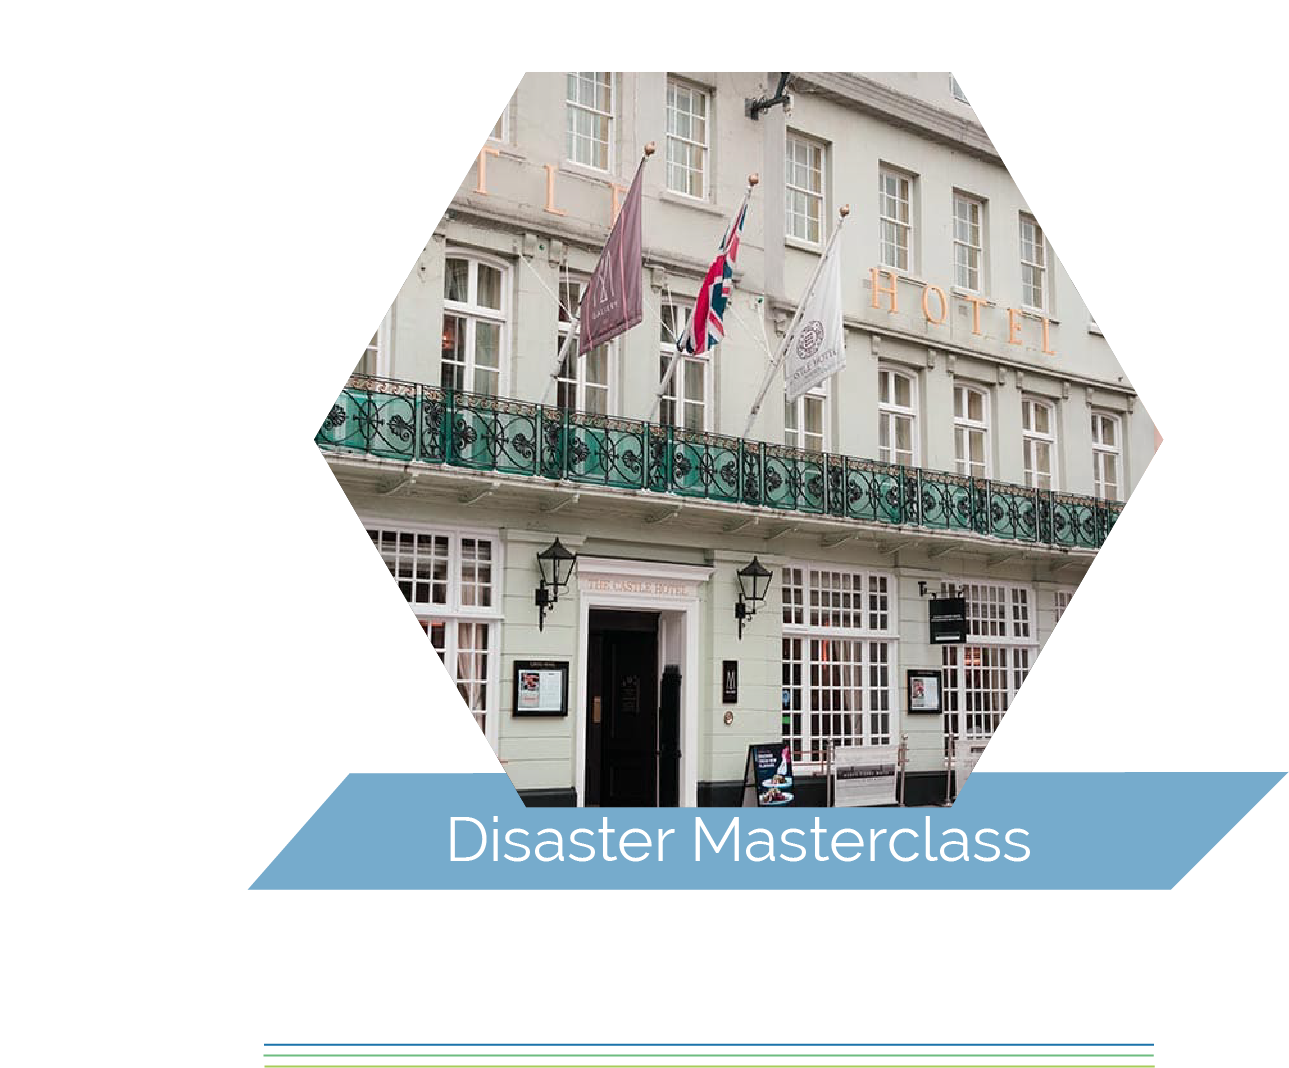 Windsor Castle Hotel Masterclass